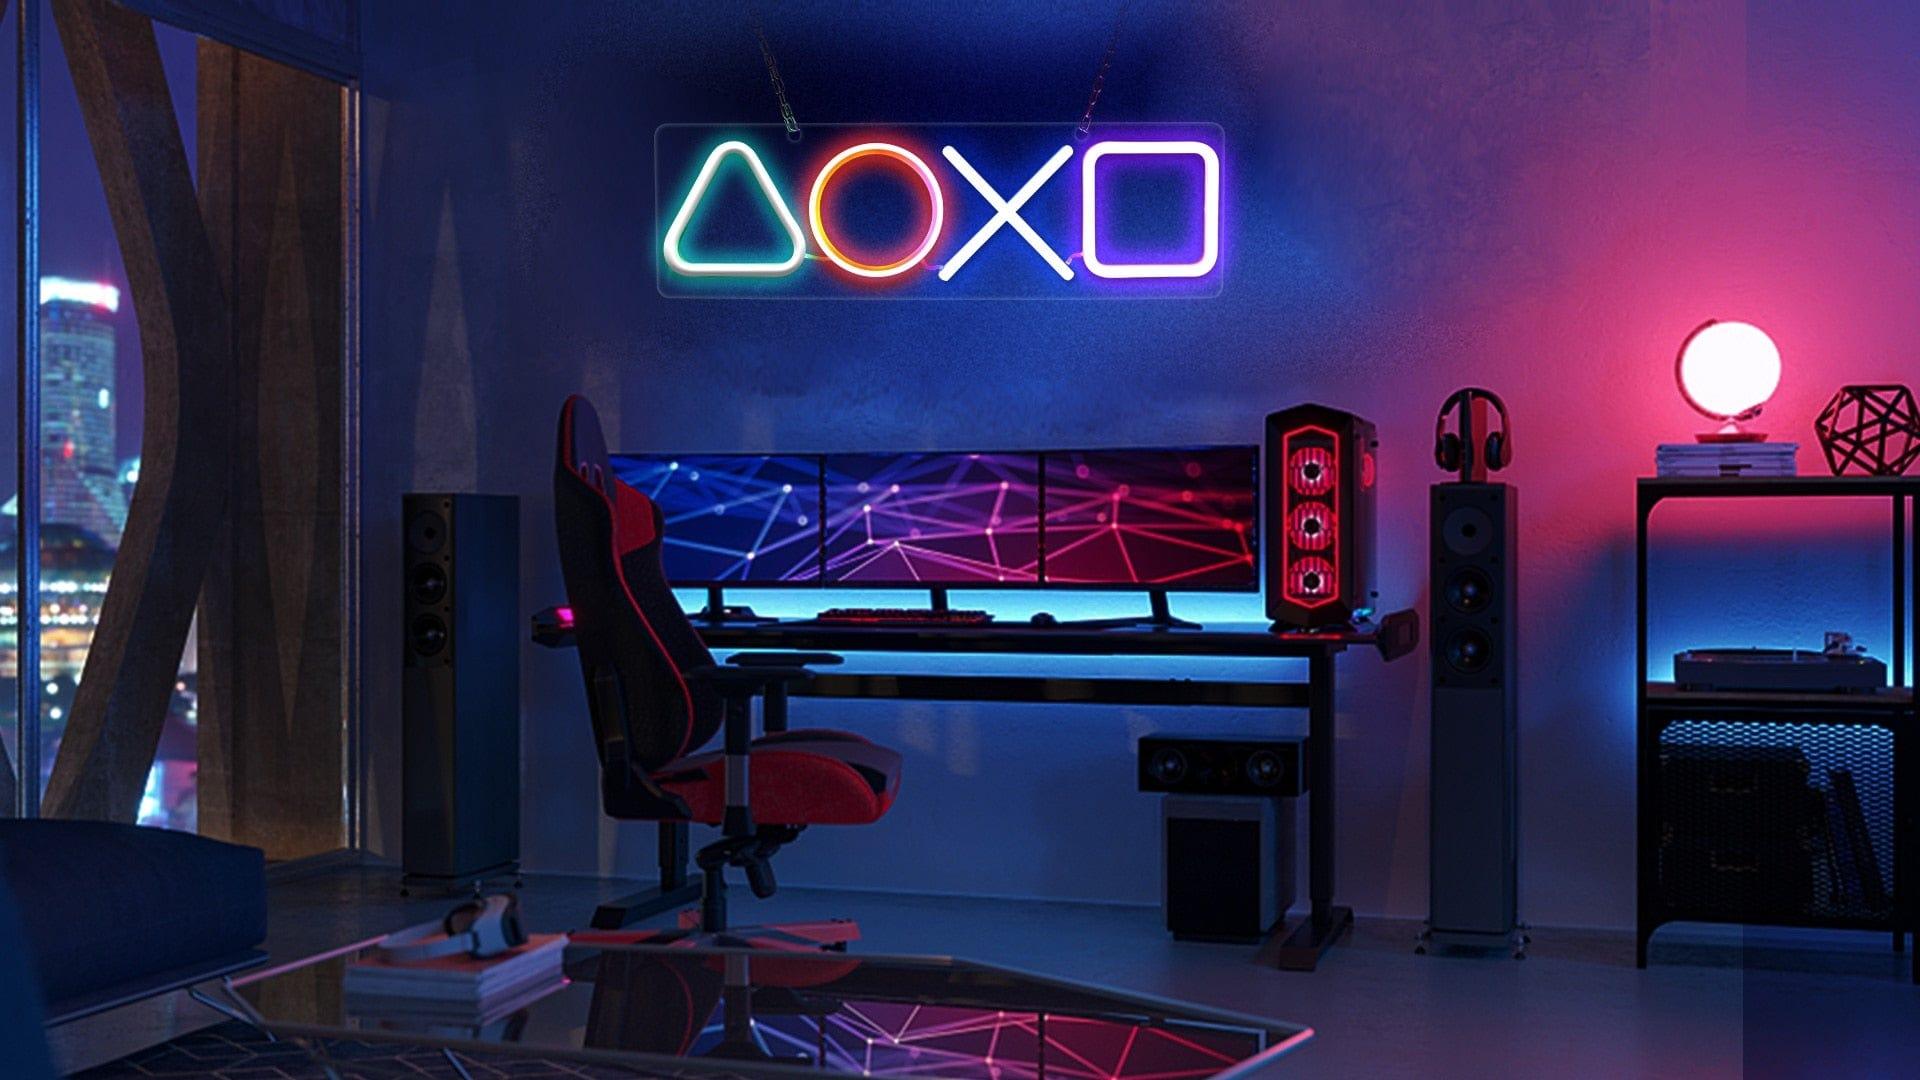 Playstation Neon Sign - Sickhaus